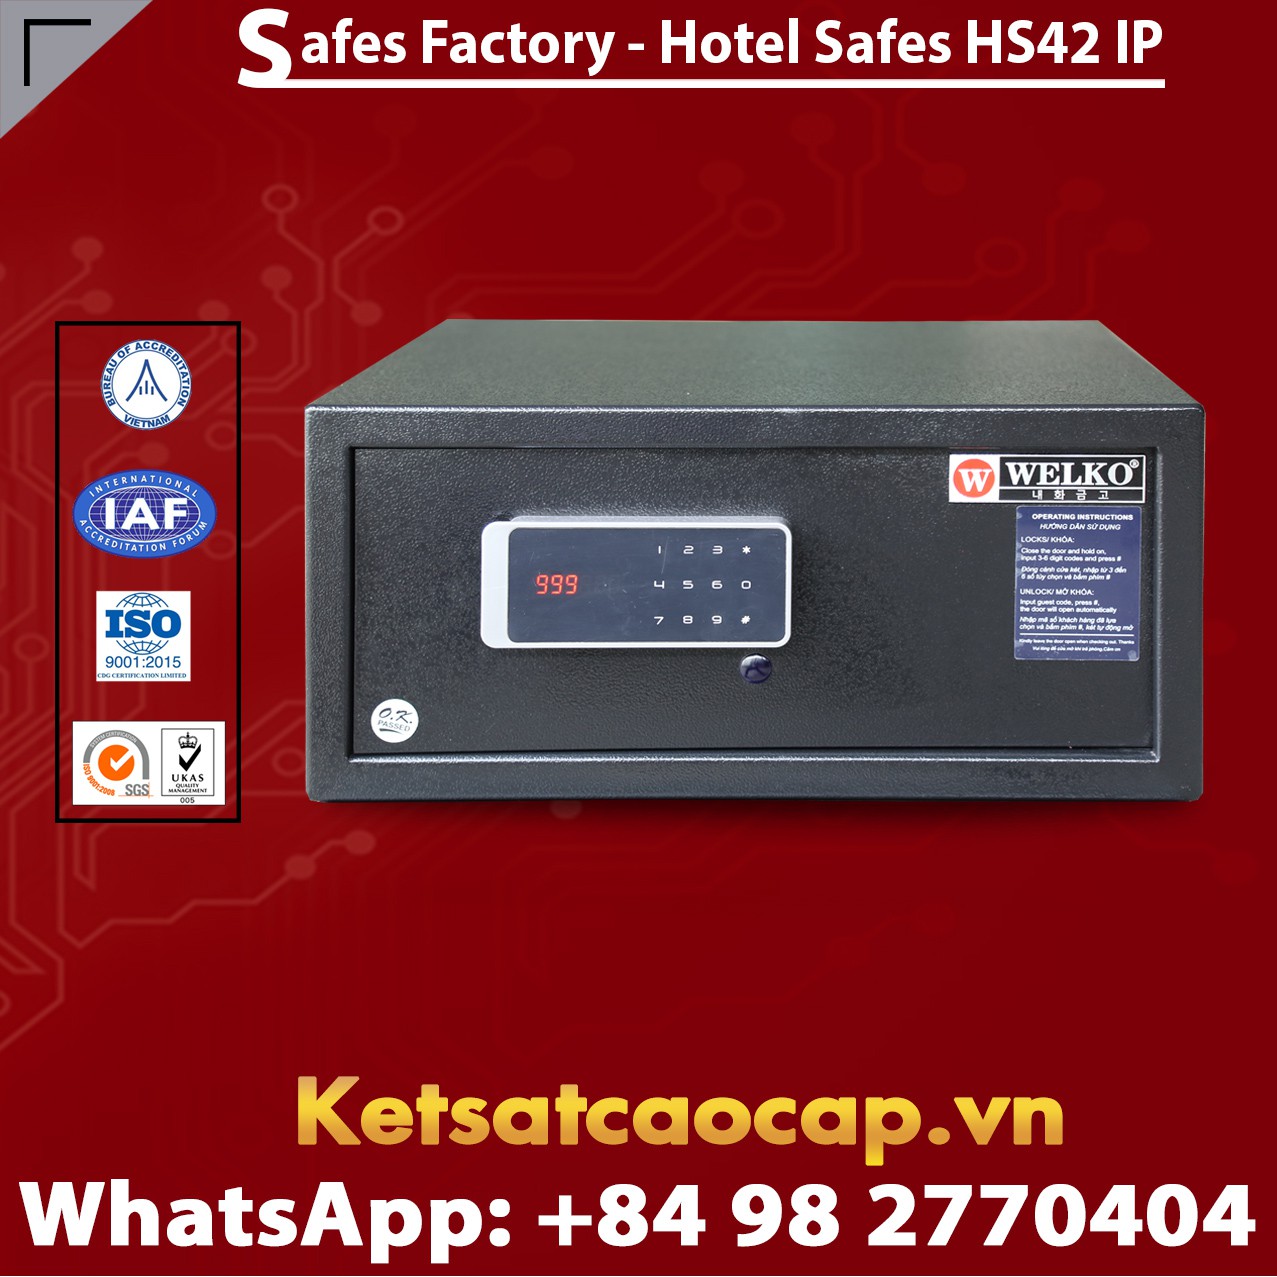 Portable Hotel Safes WELKO HS42 IP